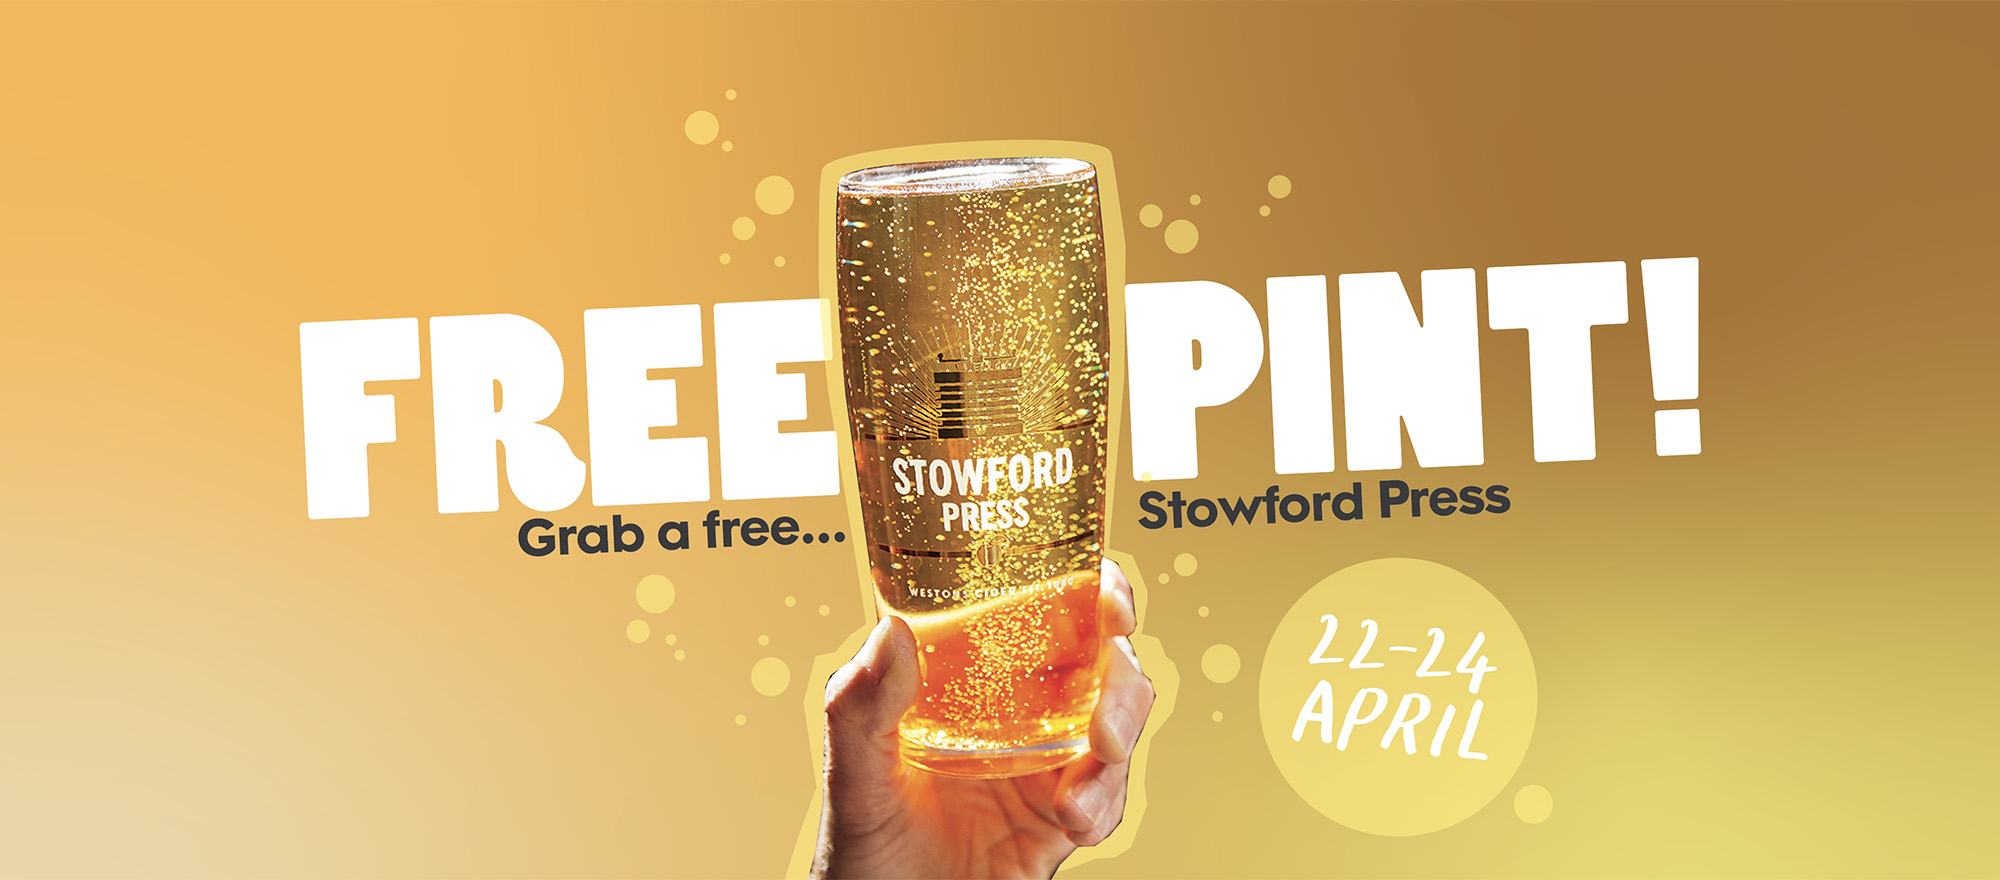 Free pint of Stowford Press